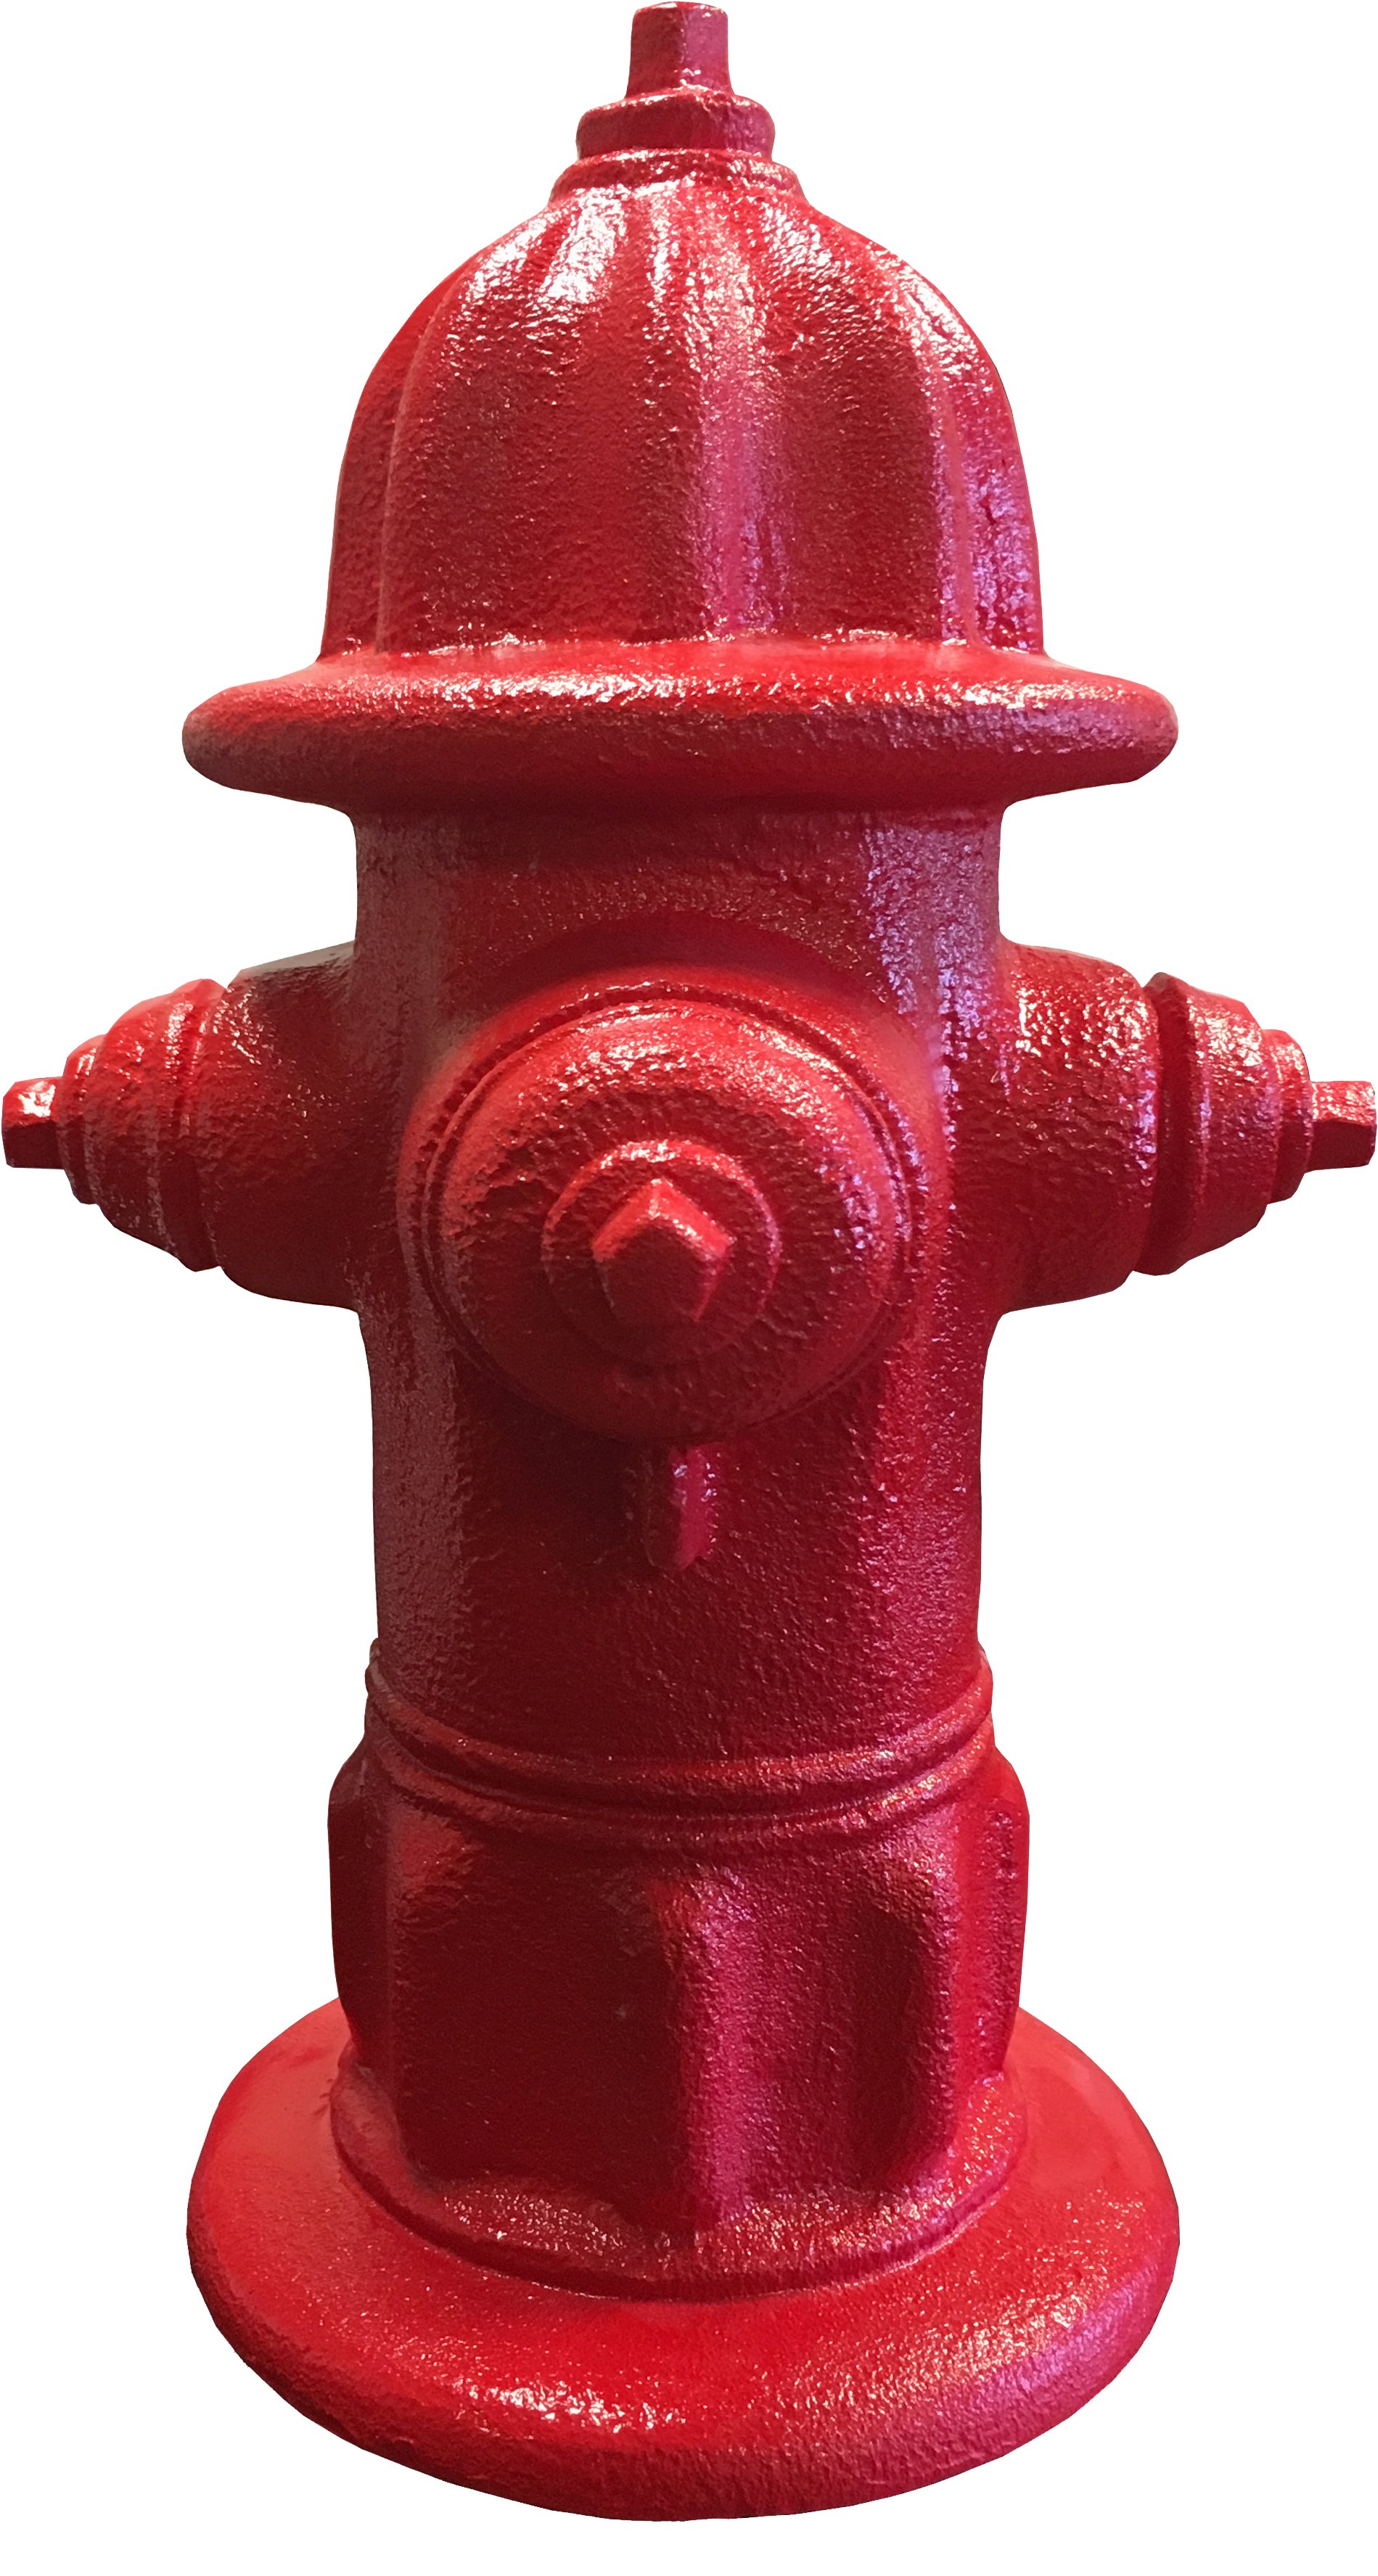 Portable Fire Hydrant - Fire Hydrant (2050x3789)